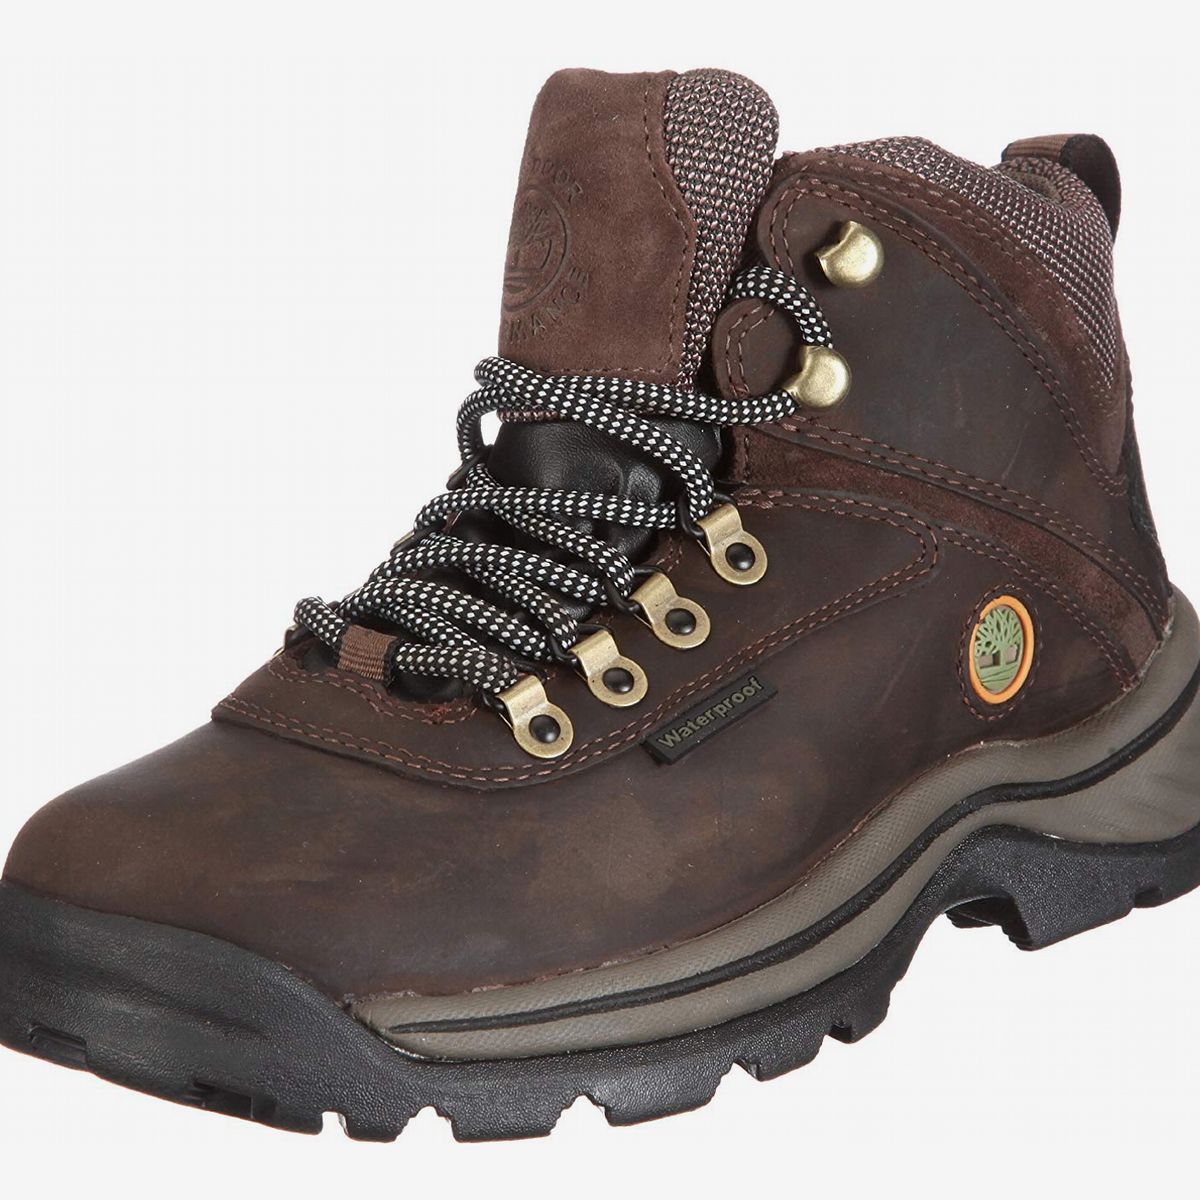 good beginner hiking boots